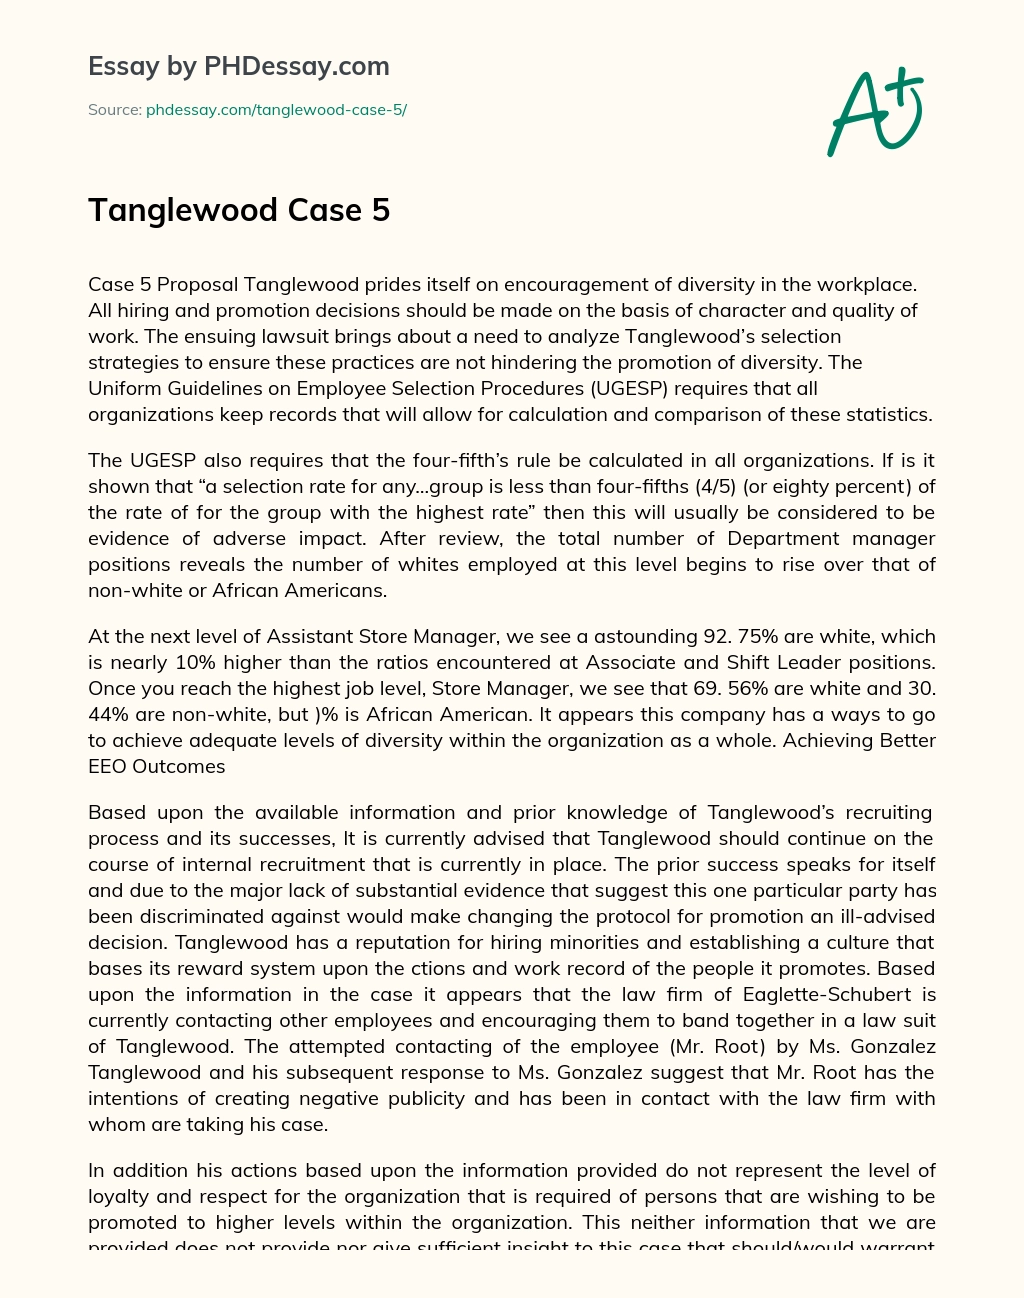 Tanglewood Case 5 essay